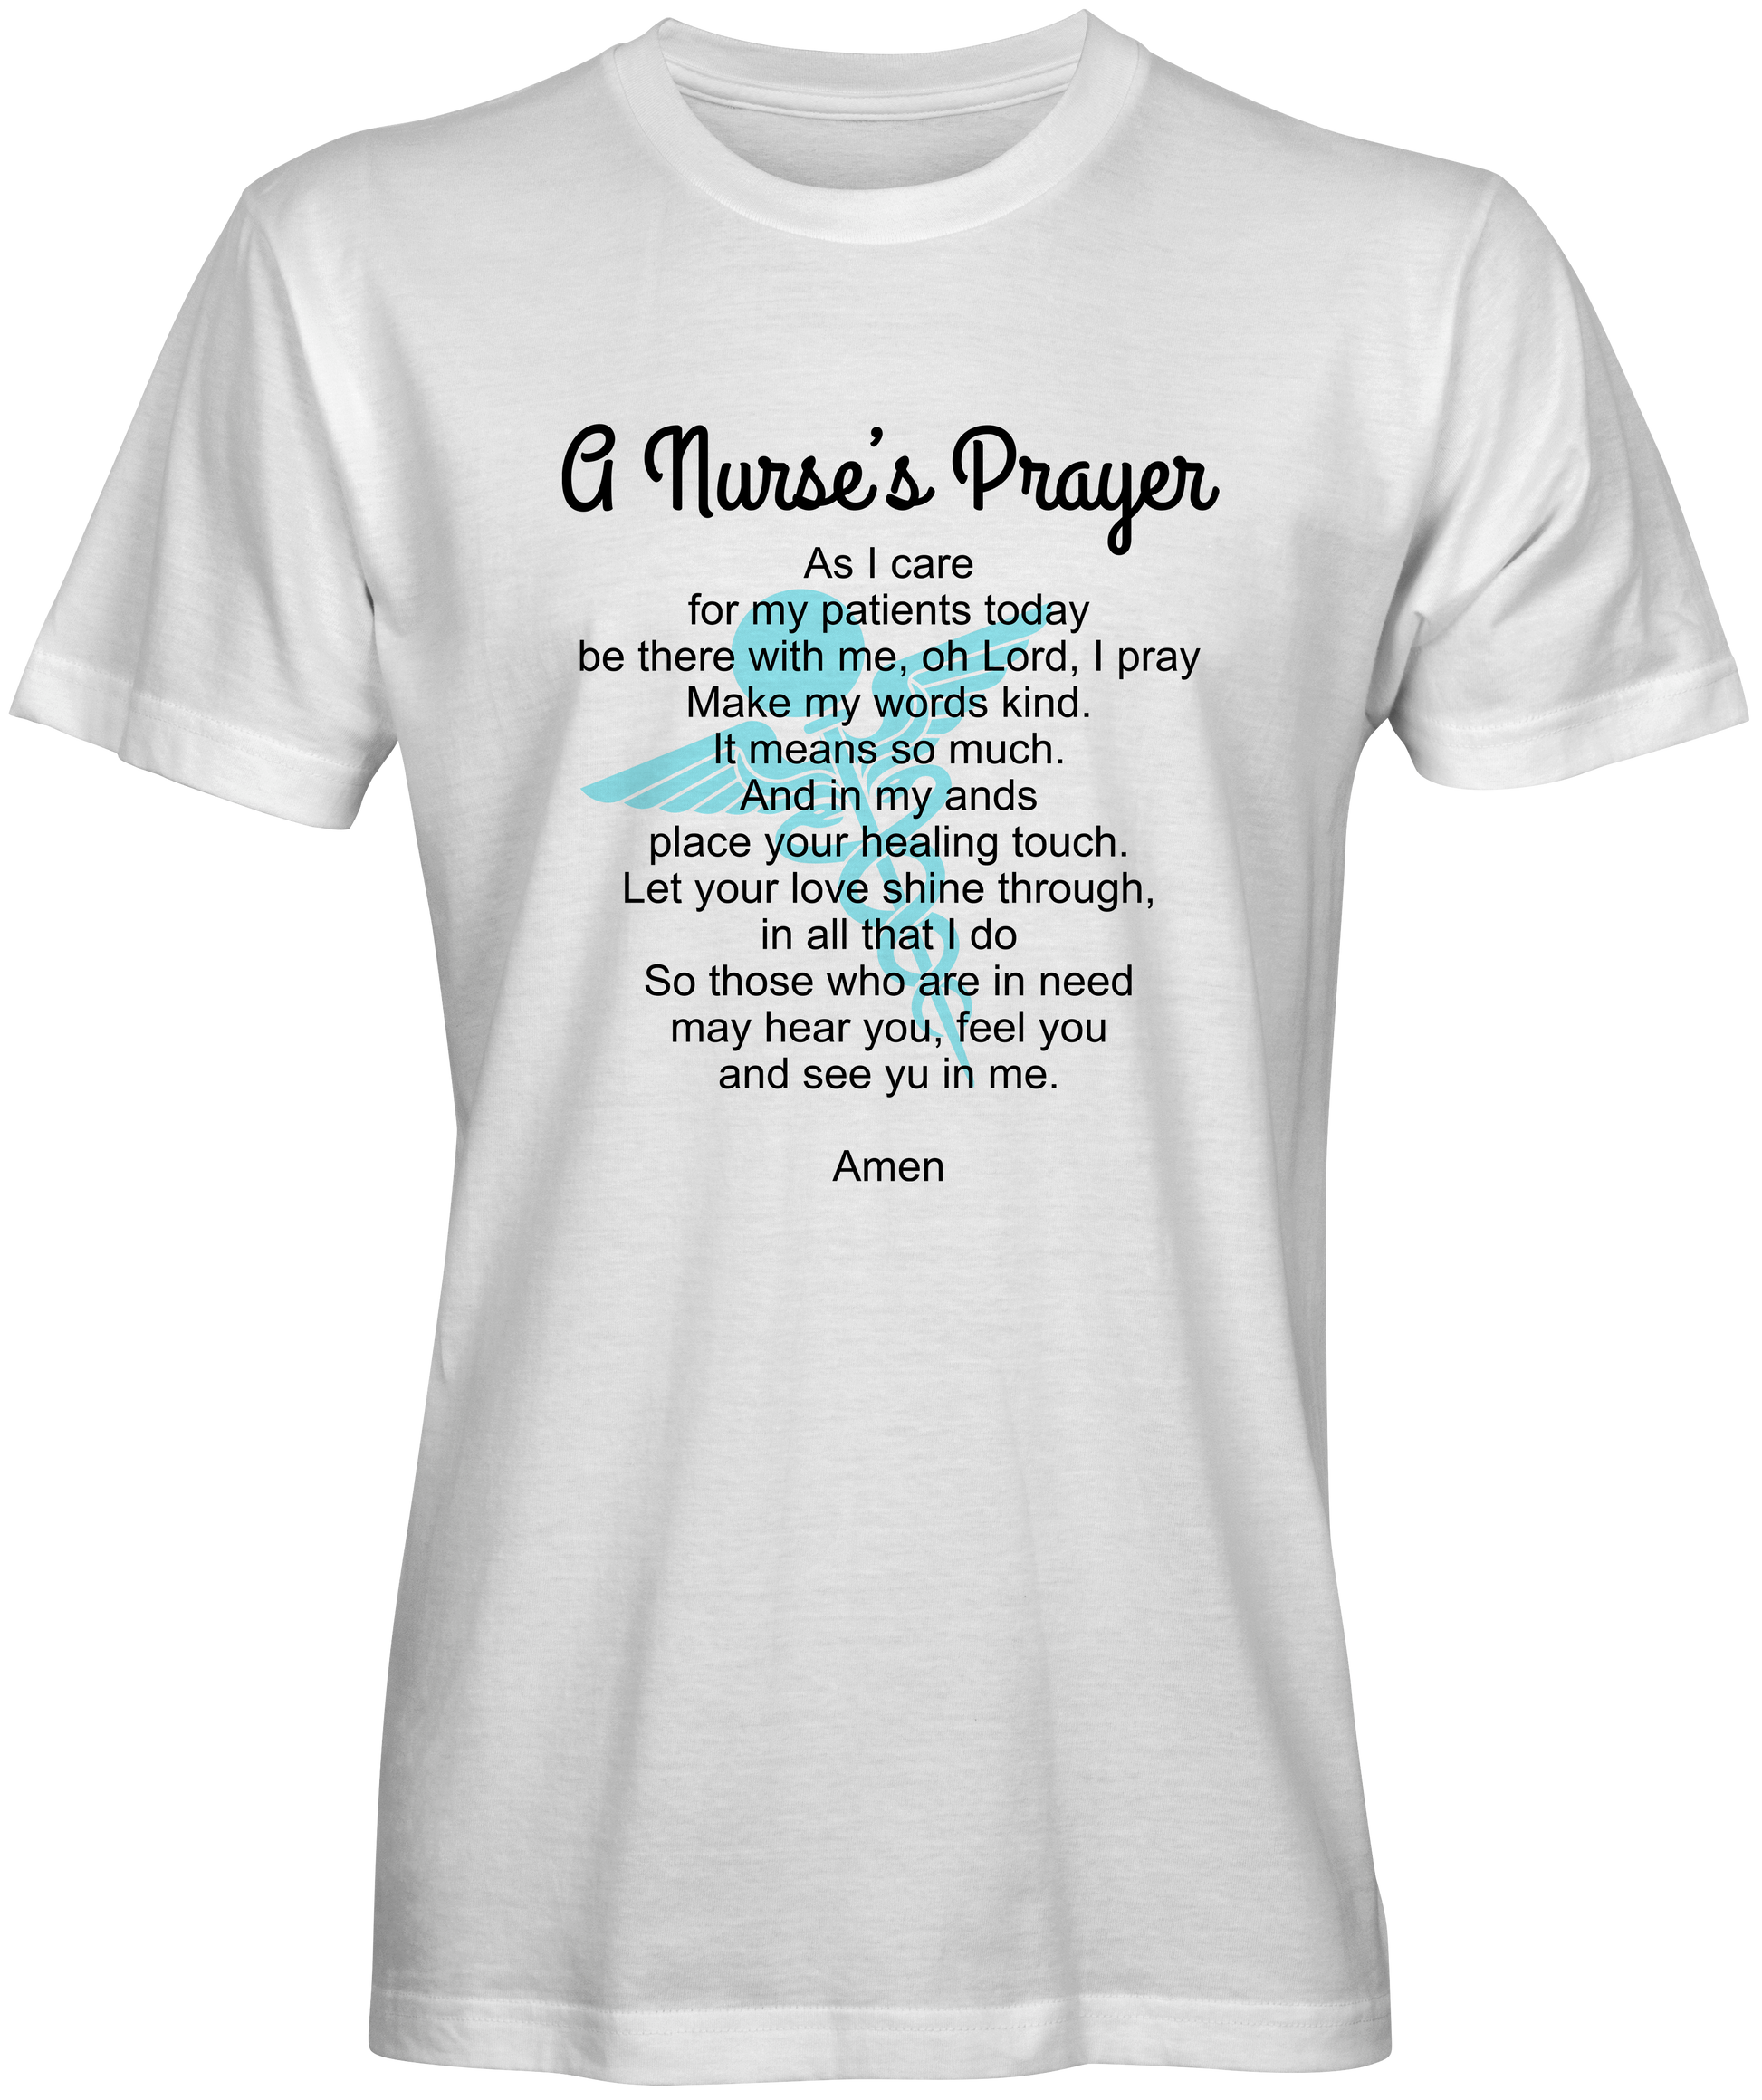 Nurses Prayer T-shirt for Sale